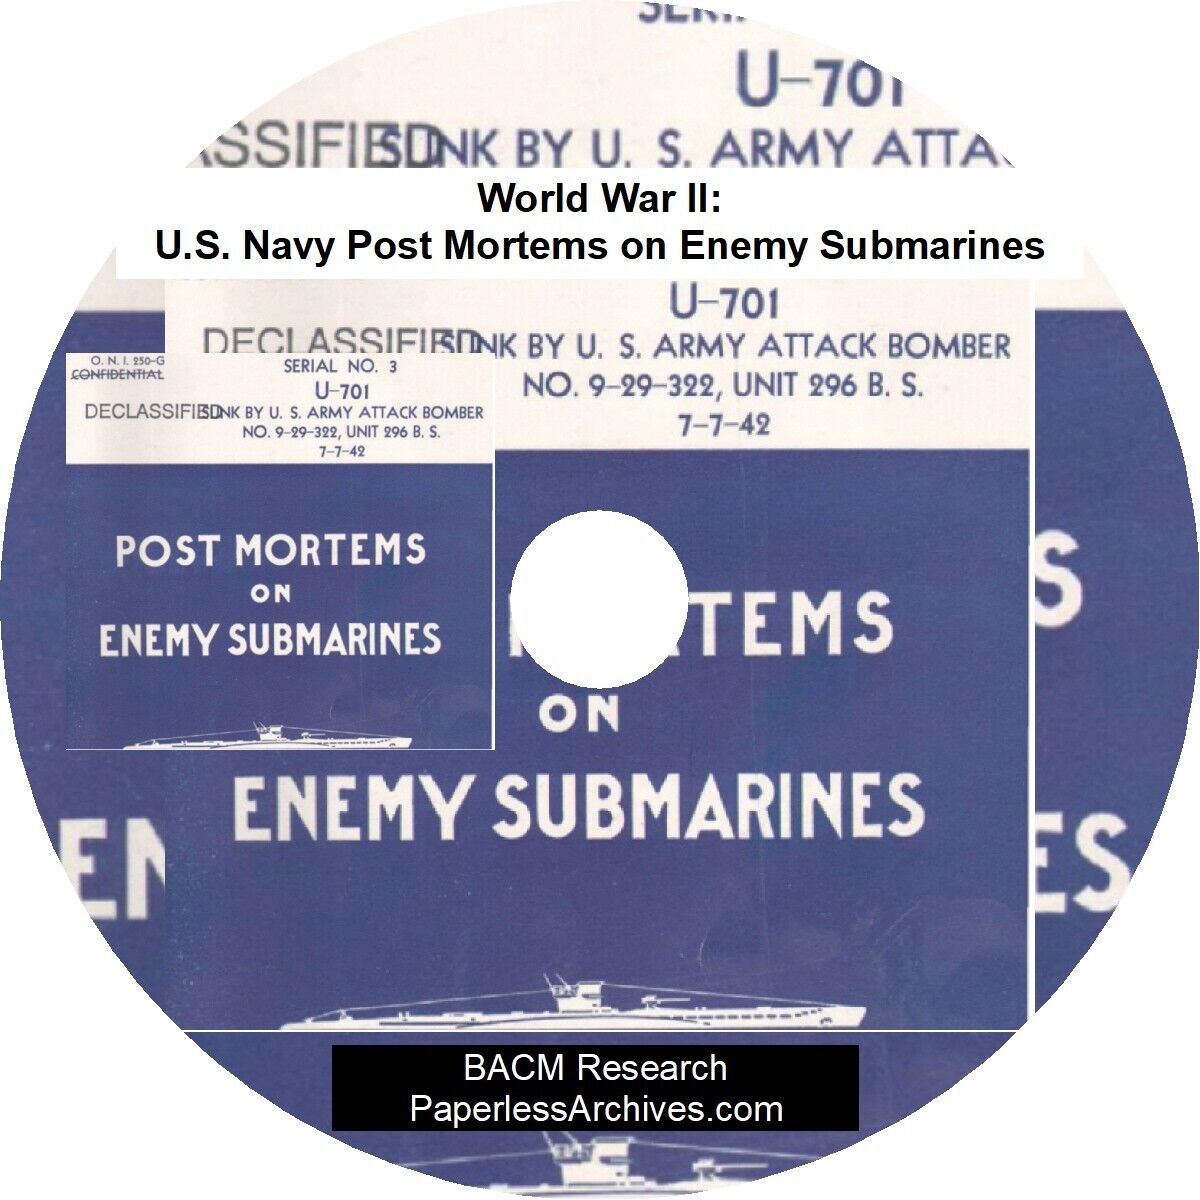 World War II: U.S. Navy Post Mortems on Enemy Submarines